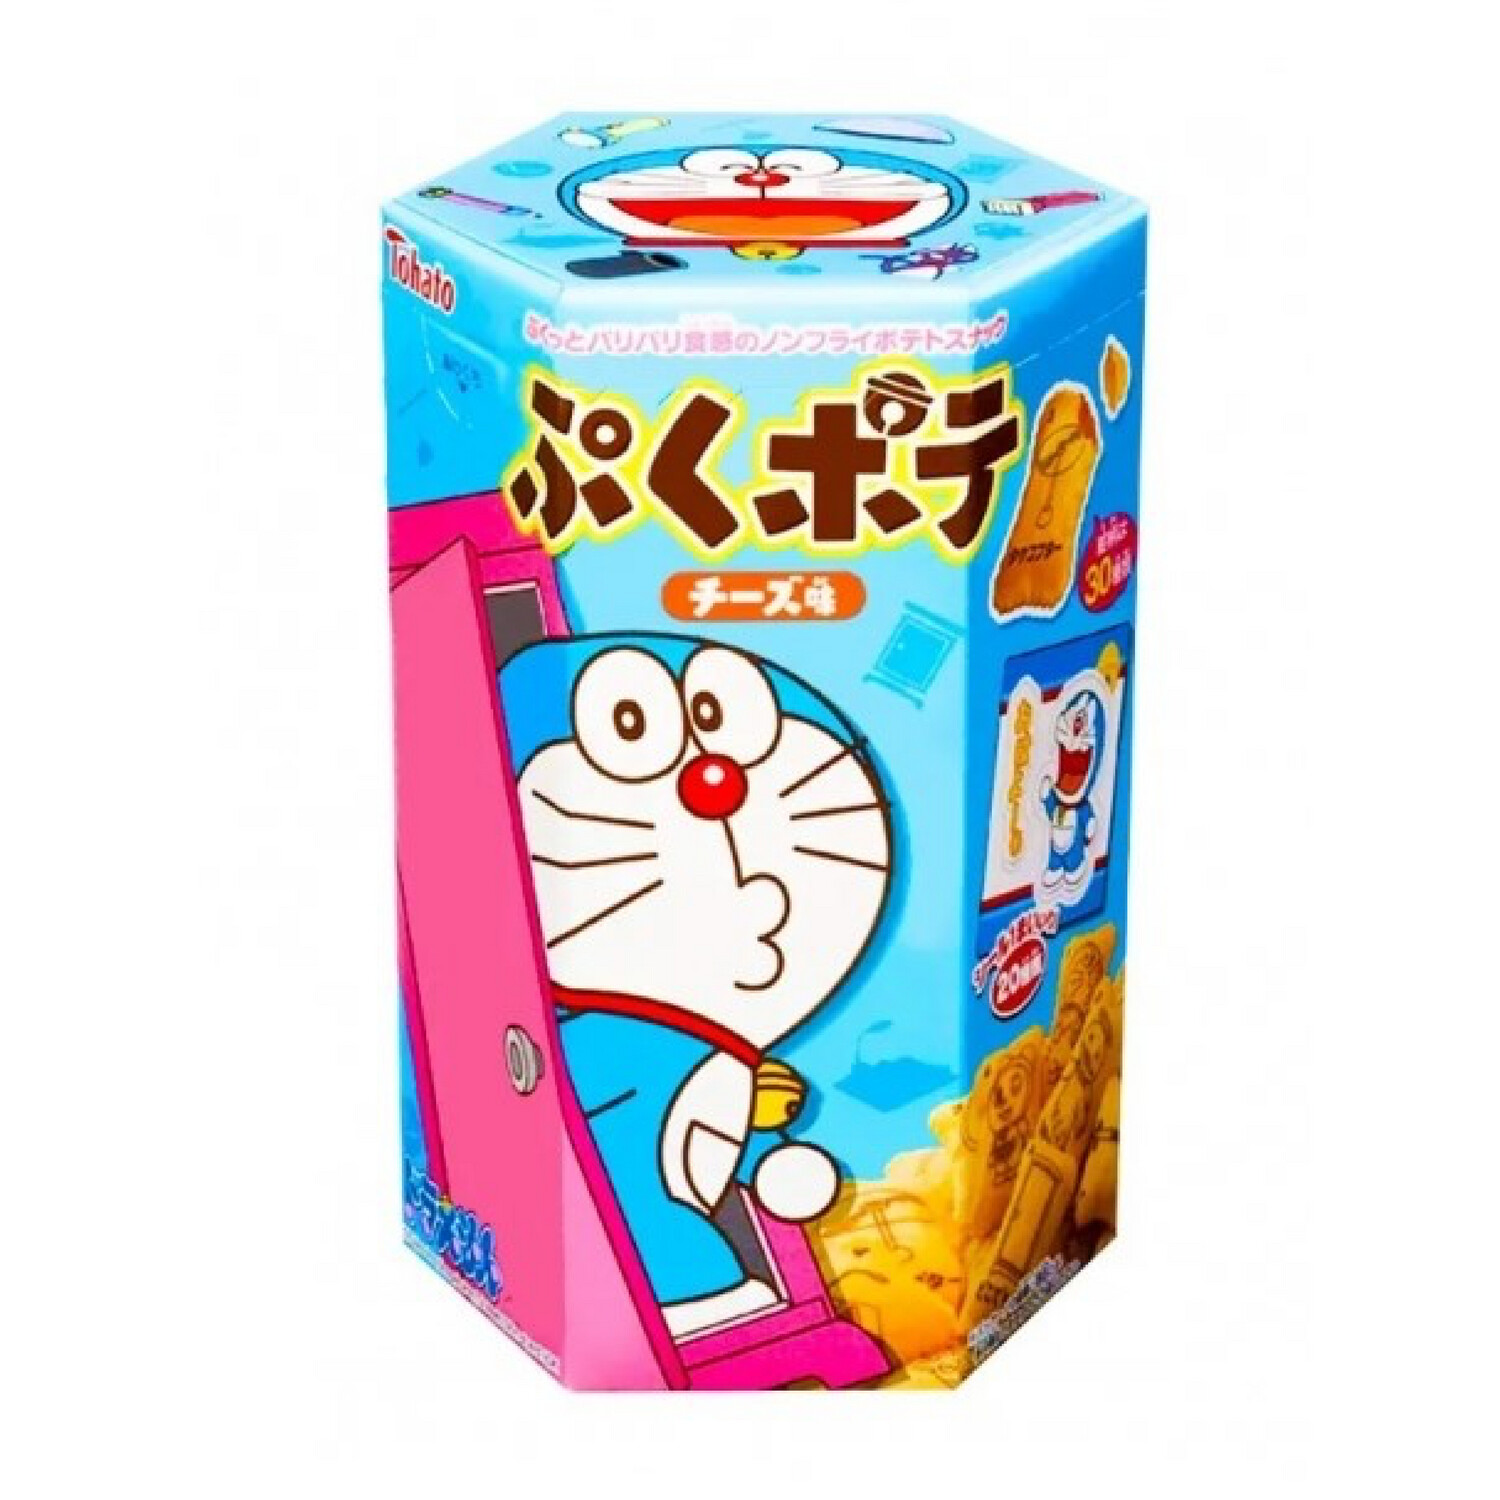 Tohato Doraemon Cheese Snack (20G)